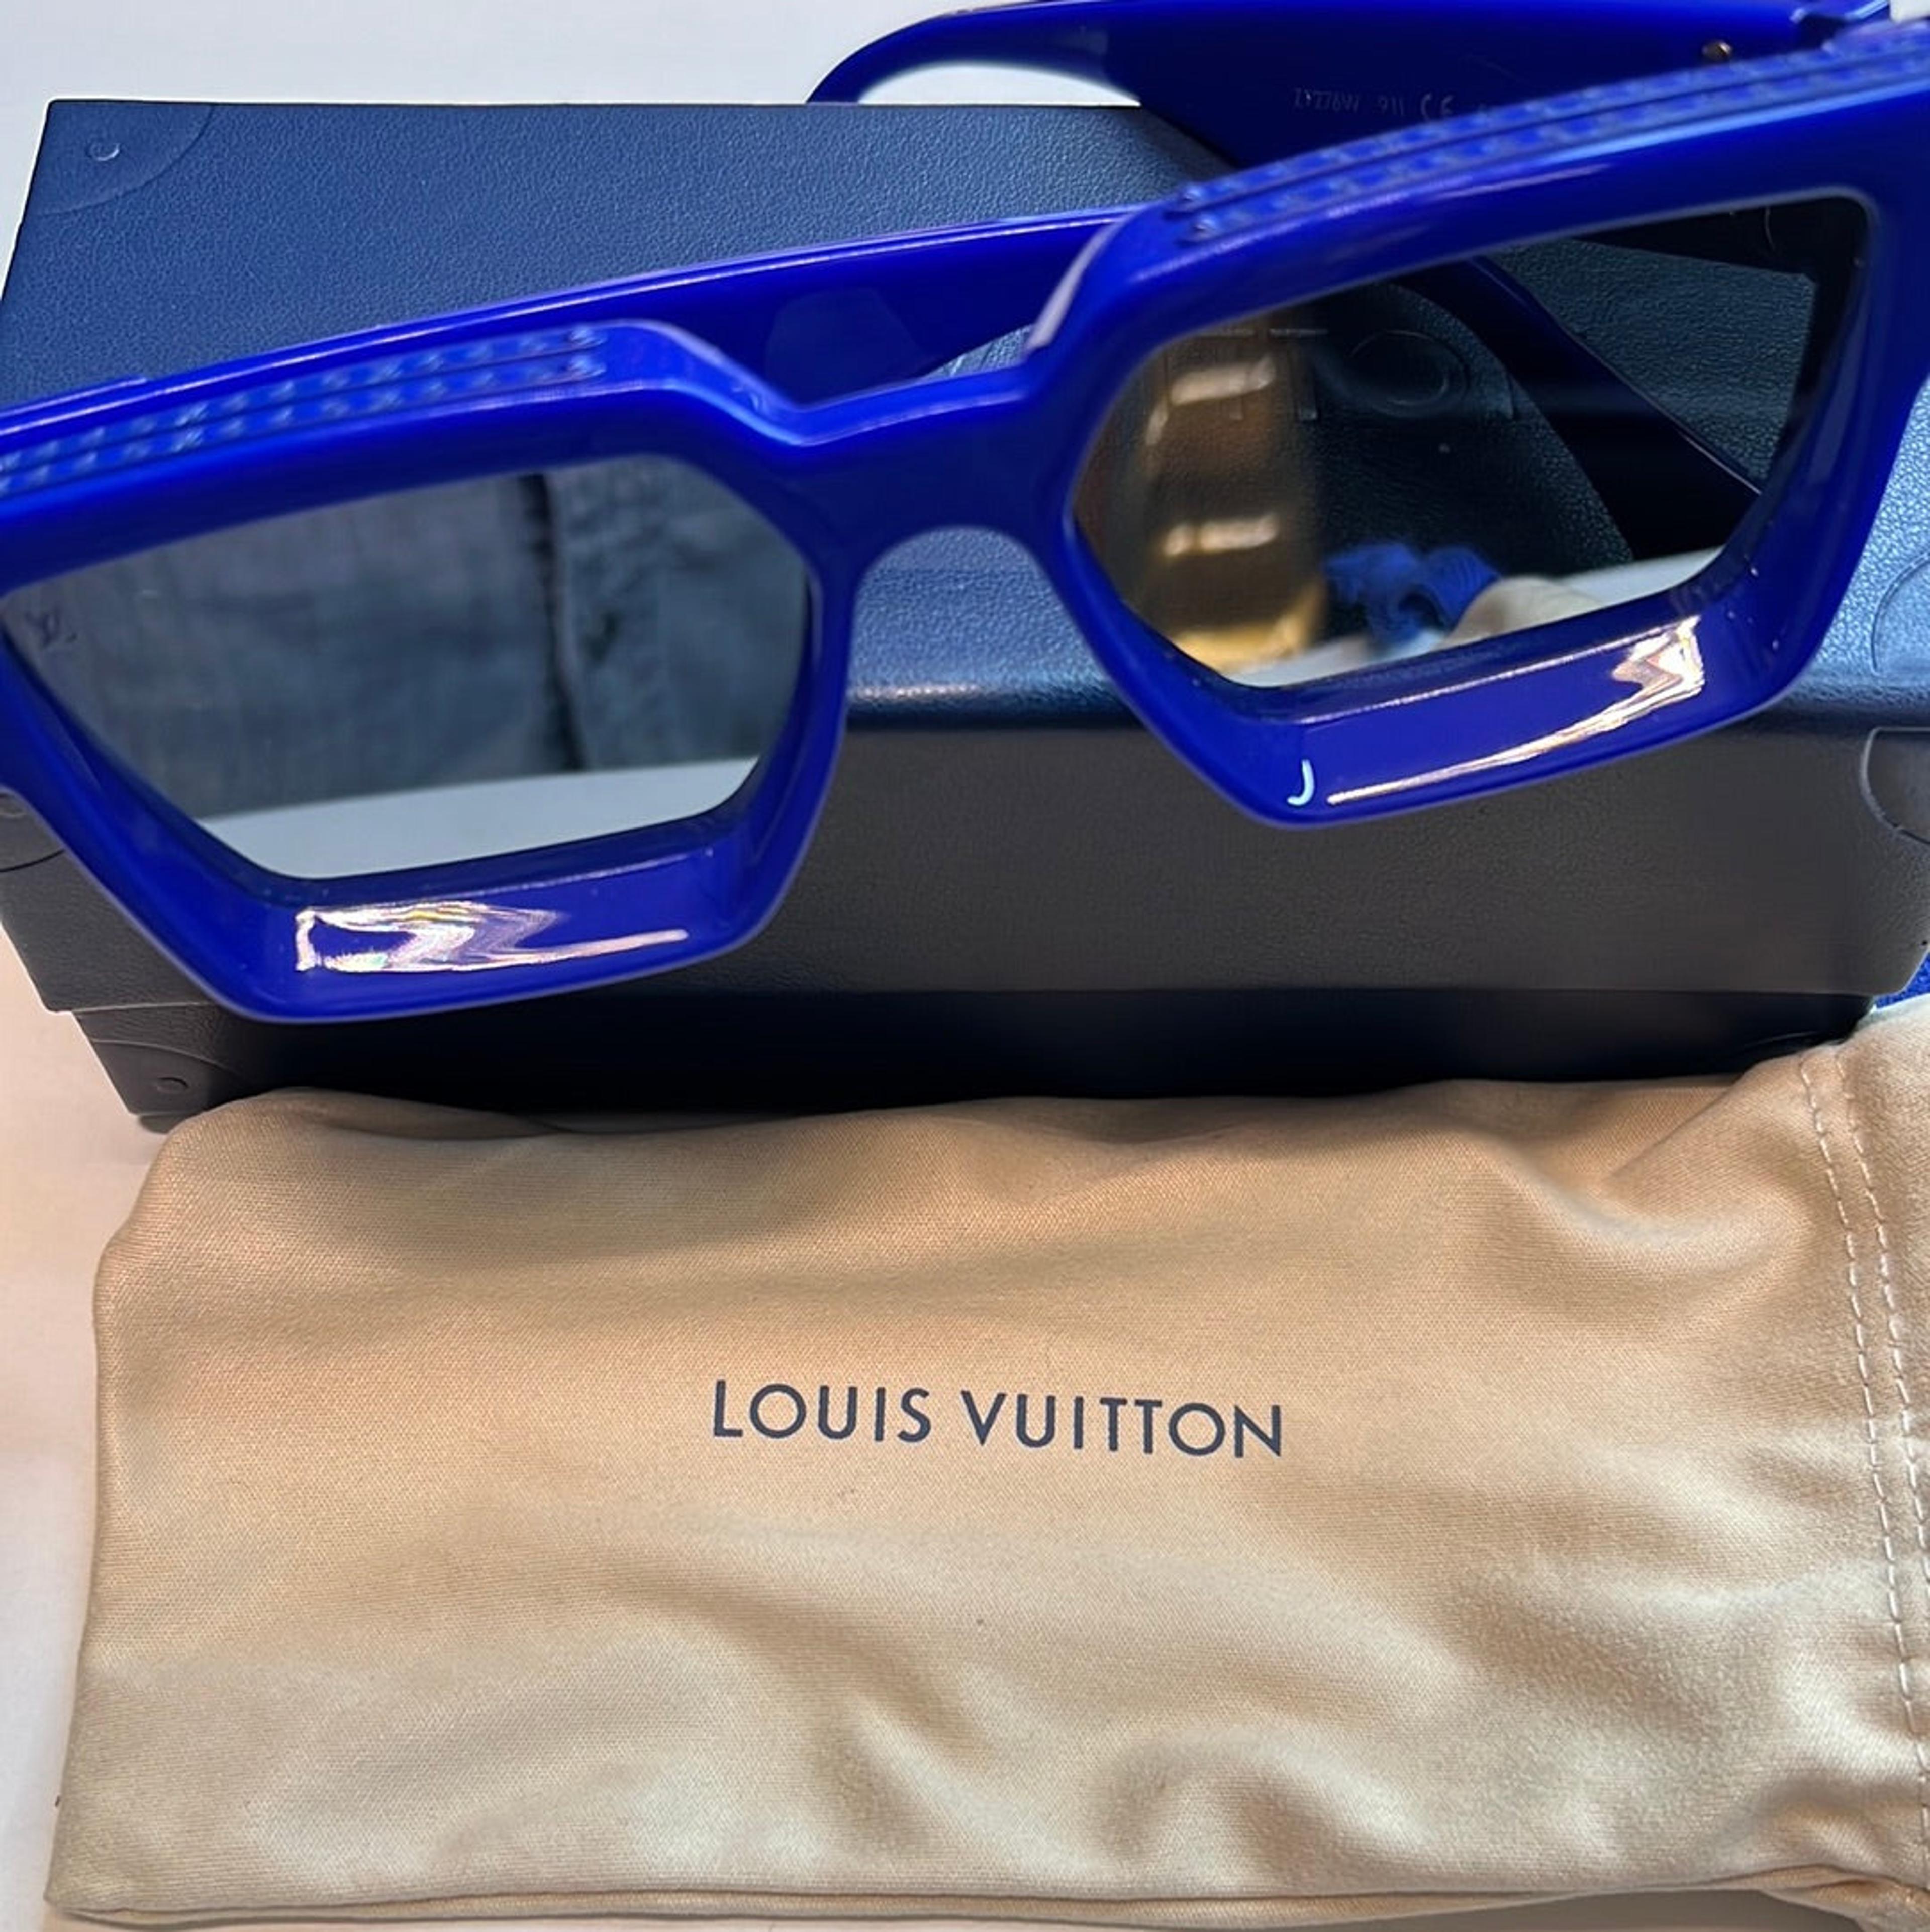 NTWRK - SNEAK PEAK 13 Preloved Louis Vuitton Blue 1.1 Millionaires